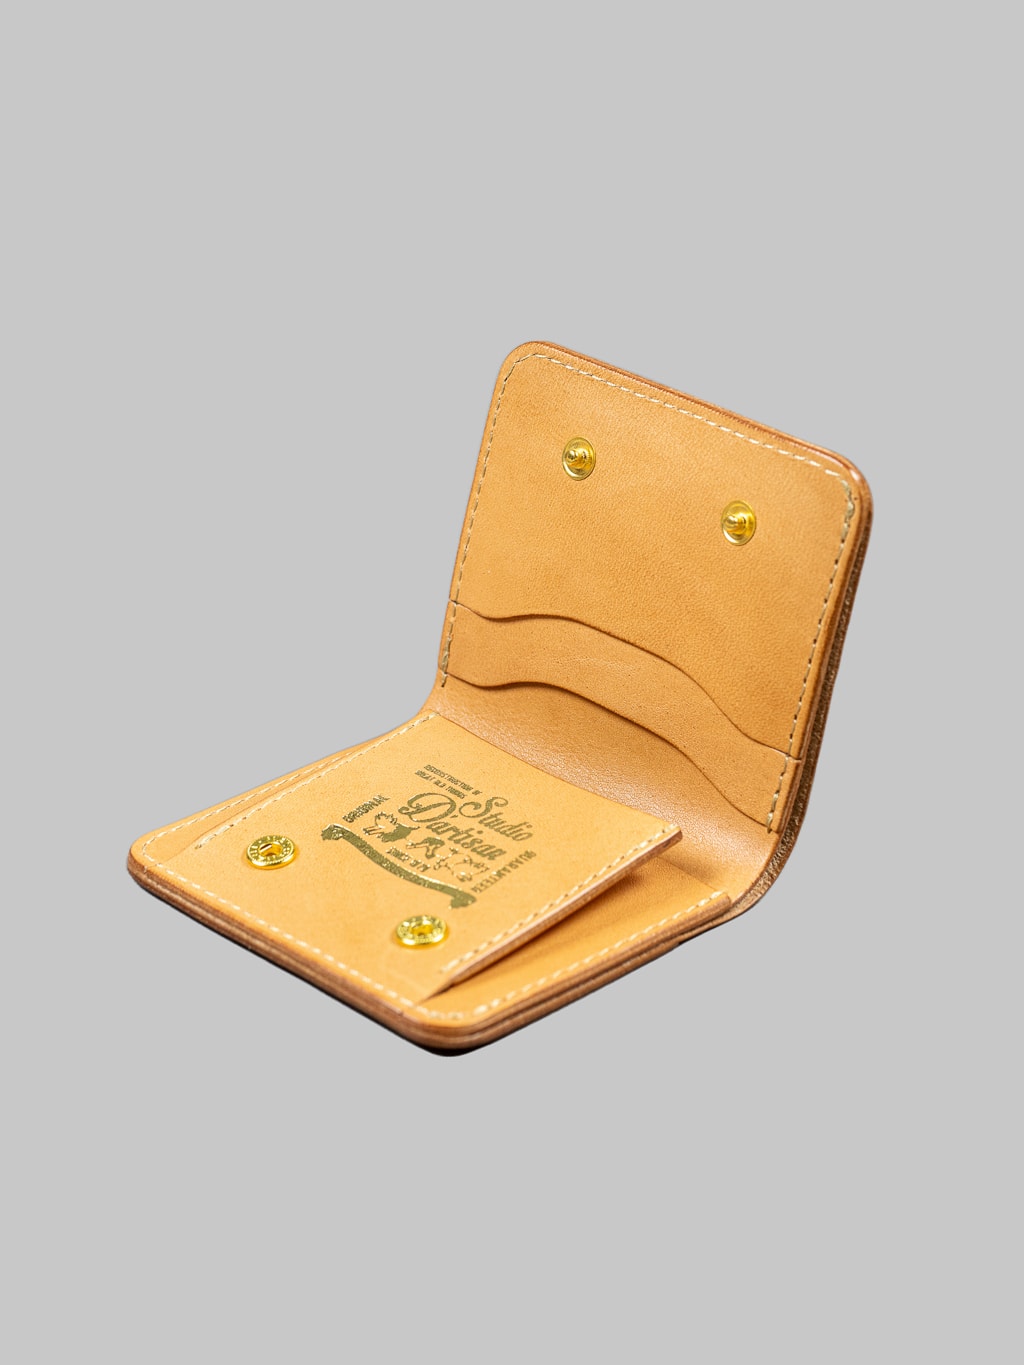 Studio Dartisan natural leather mini wallet compartment details